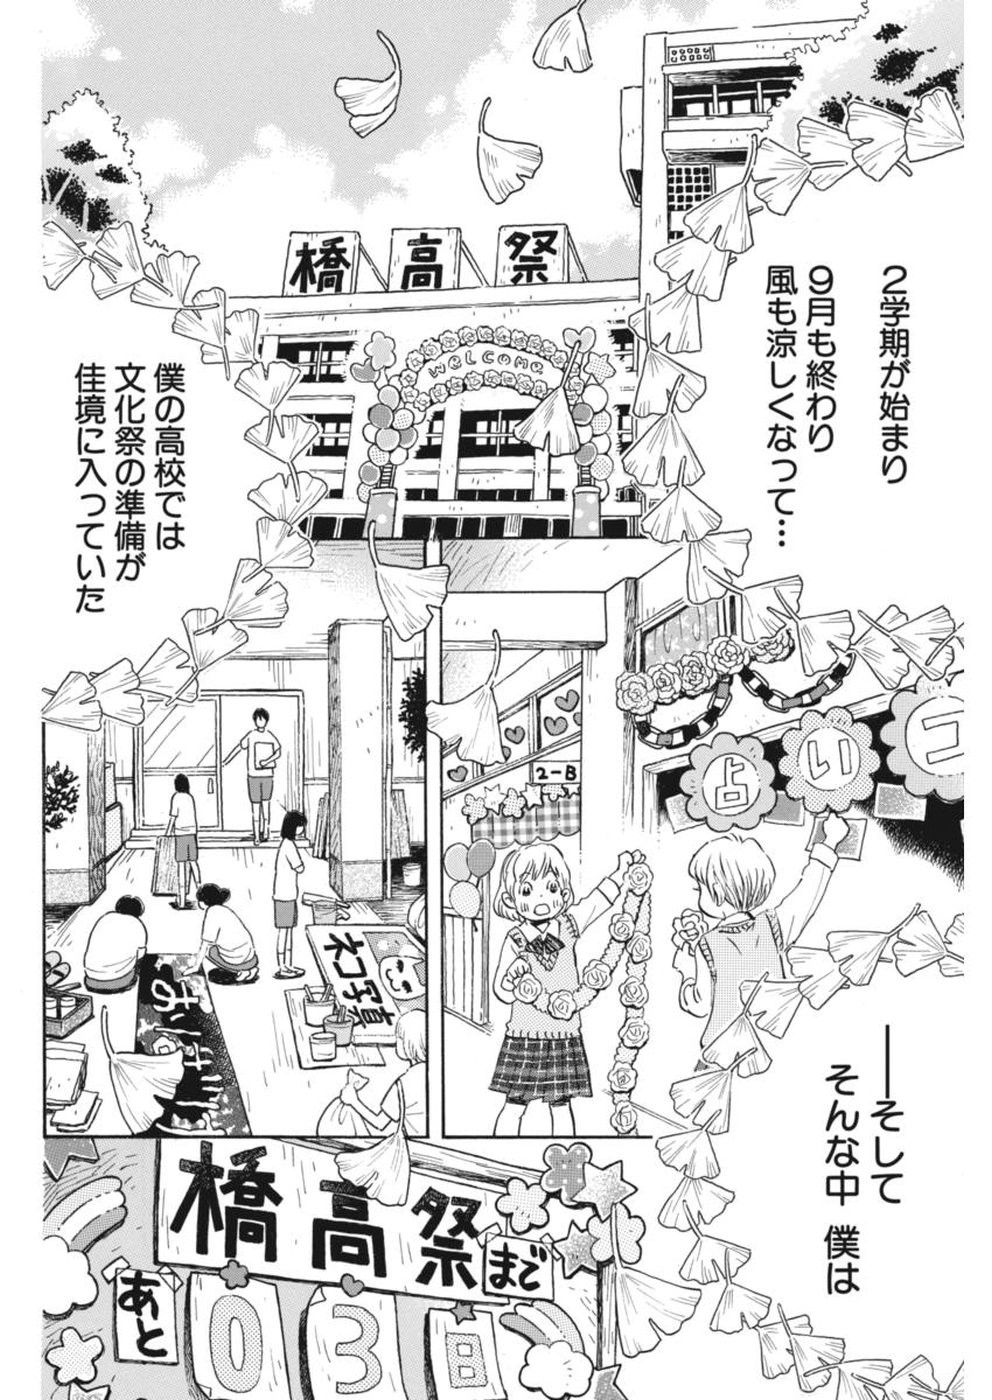 3 Gatsu no Lion - Chapter 148 - Page 2